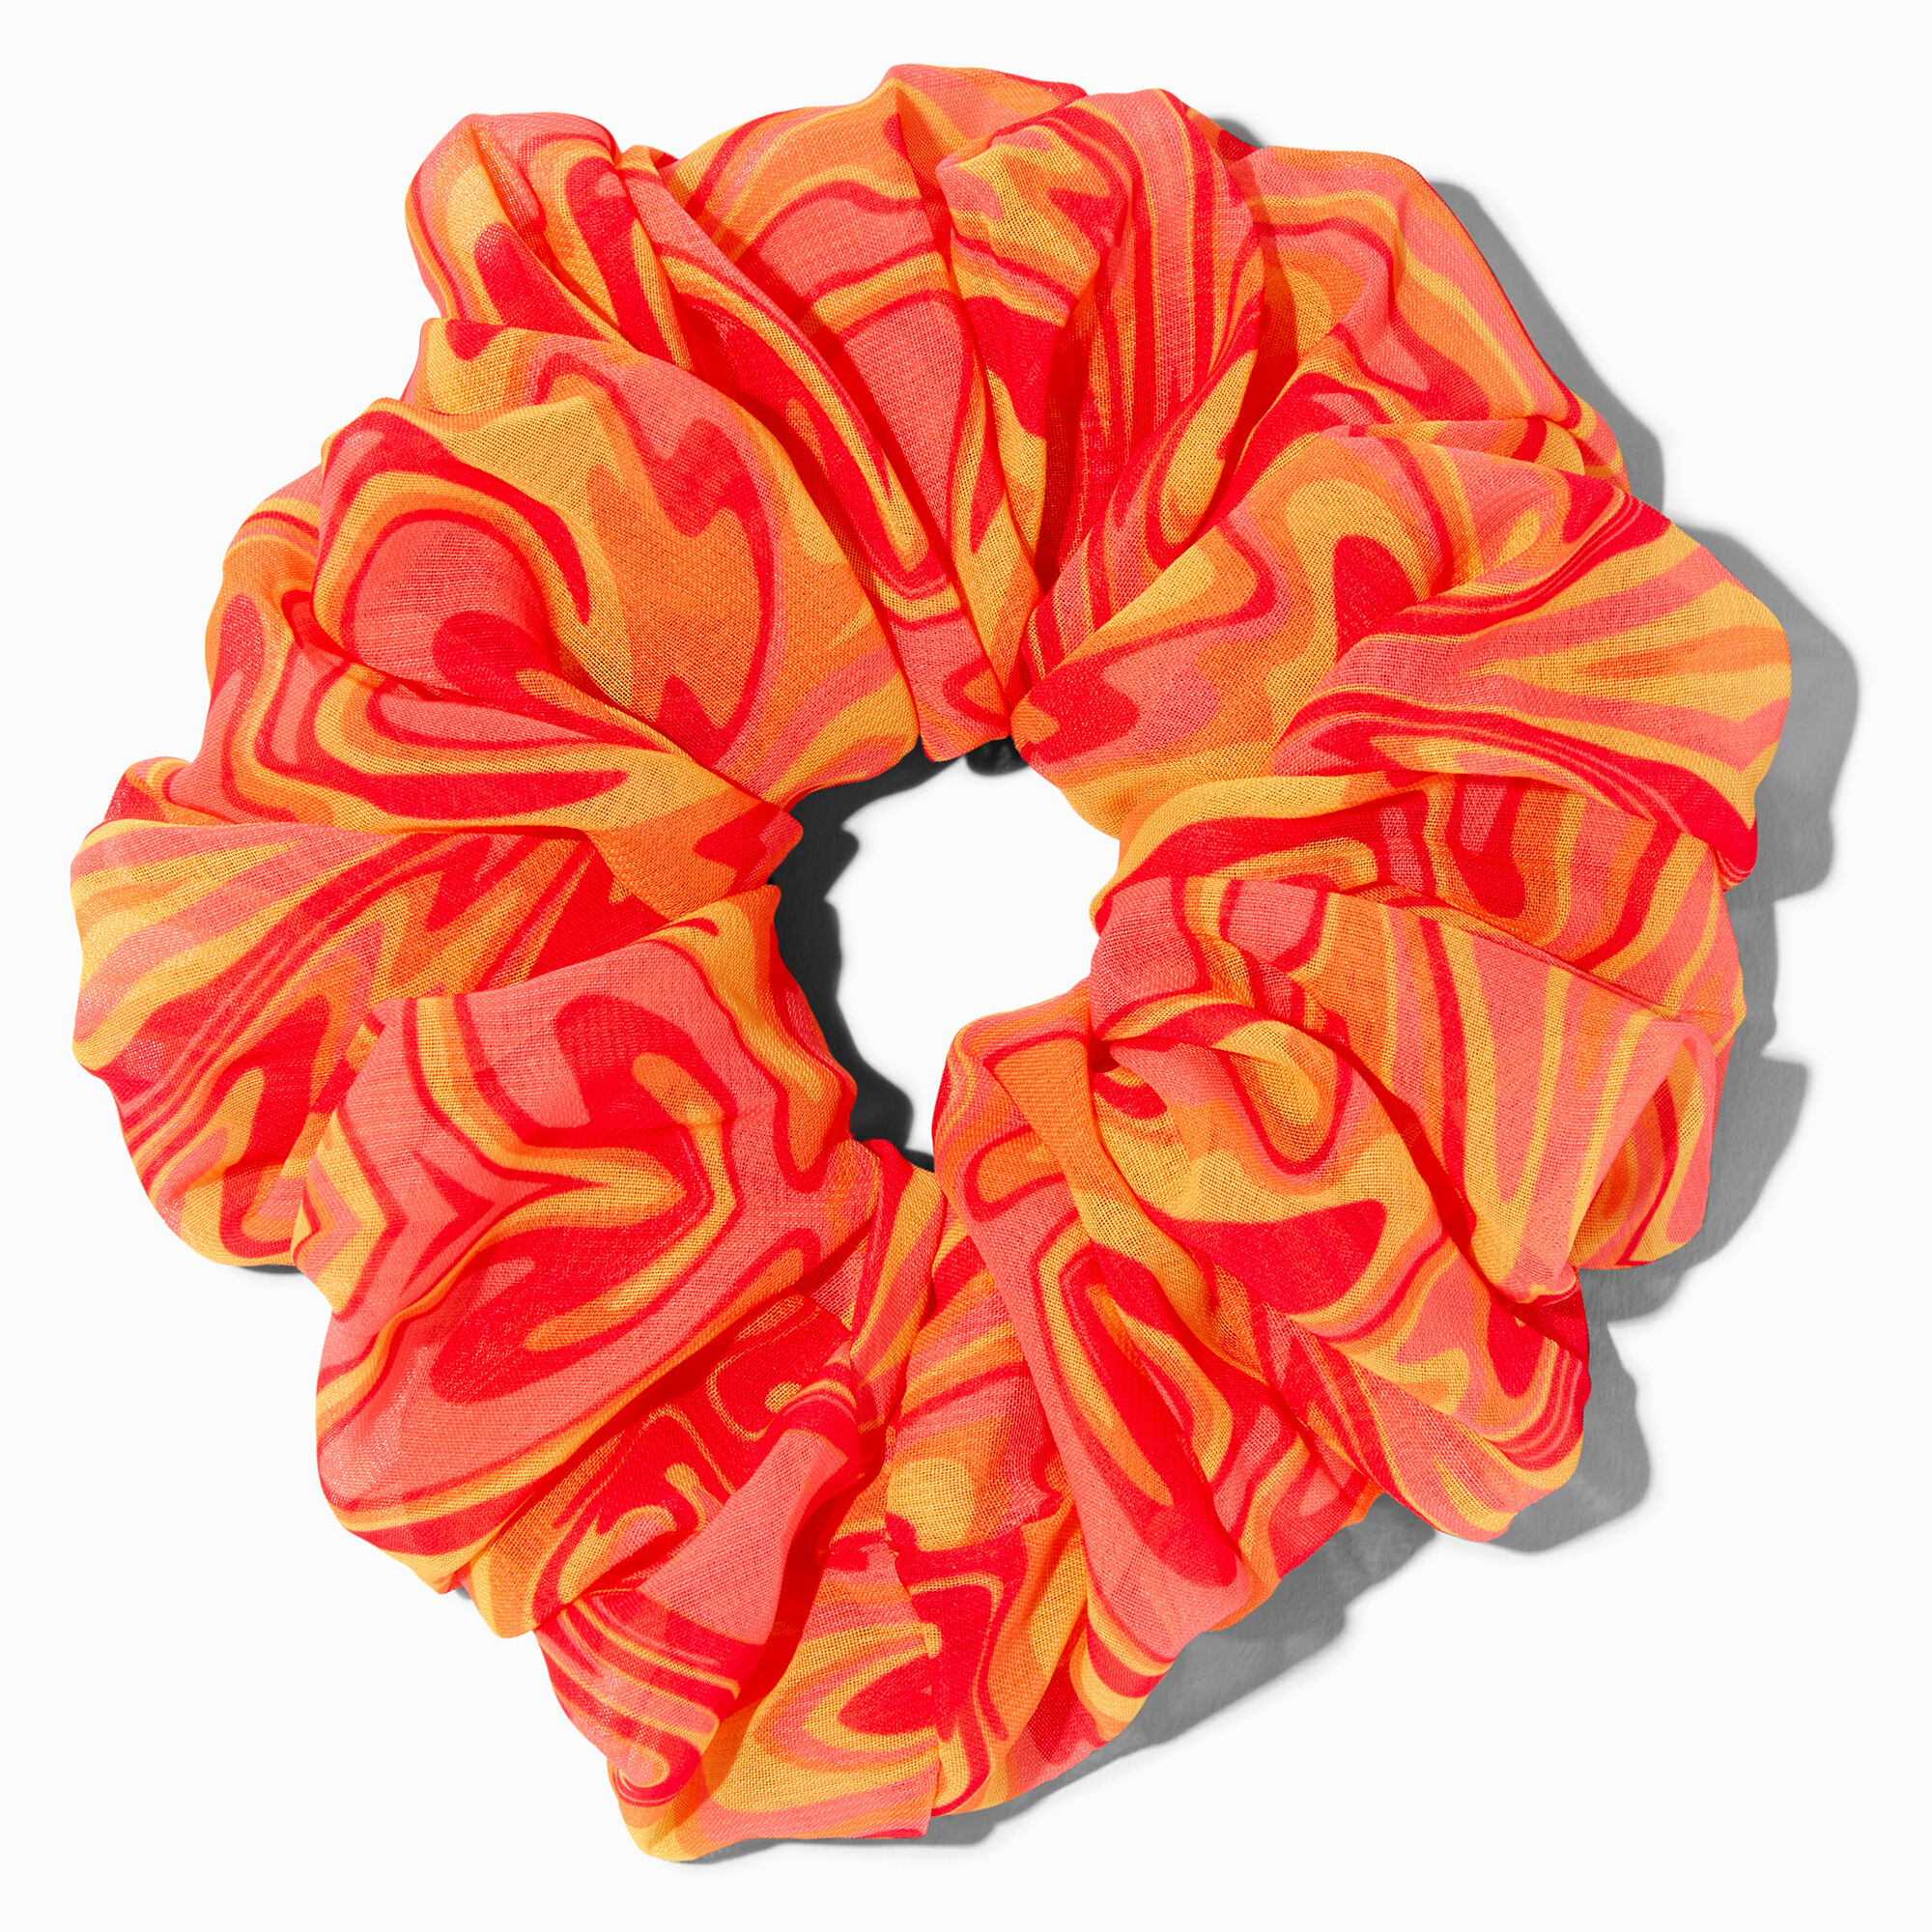 View Claires Giant Swirl Silky Hair Scrunchie Bracelet Orange information